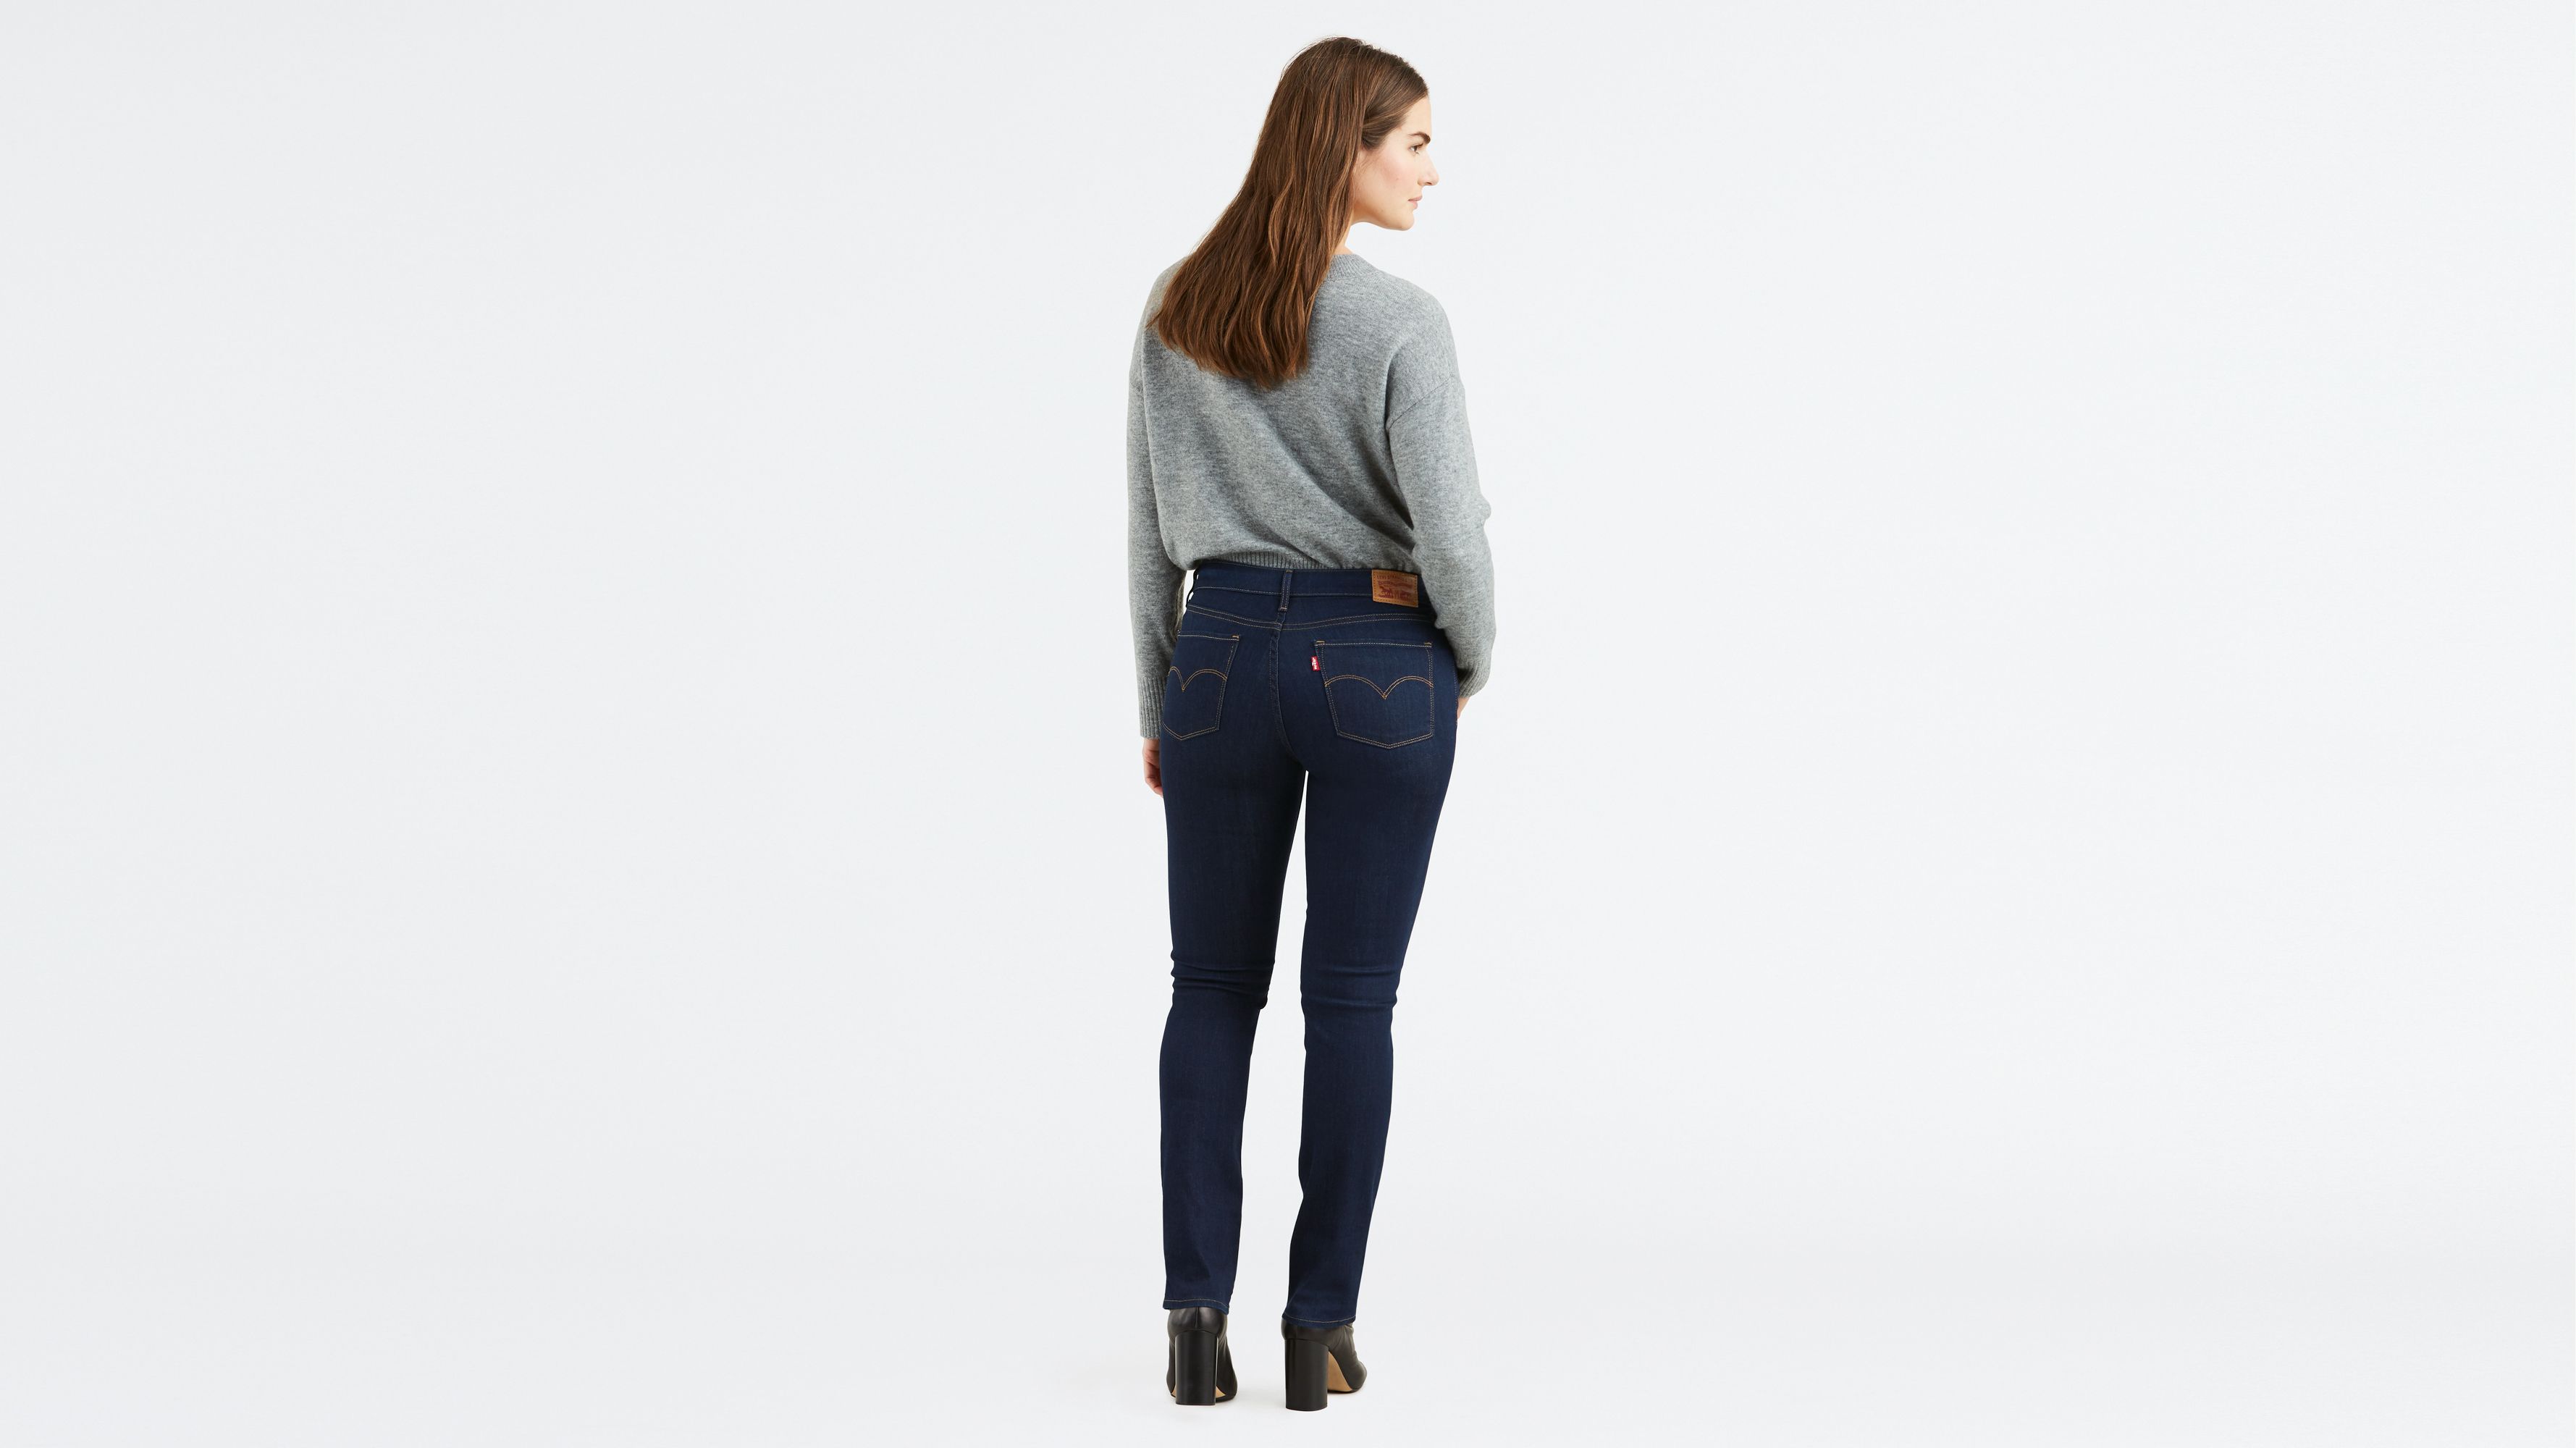 levi's 712 slim jeans